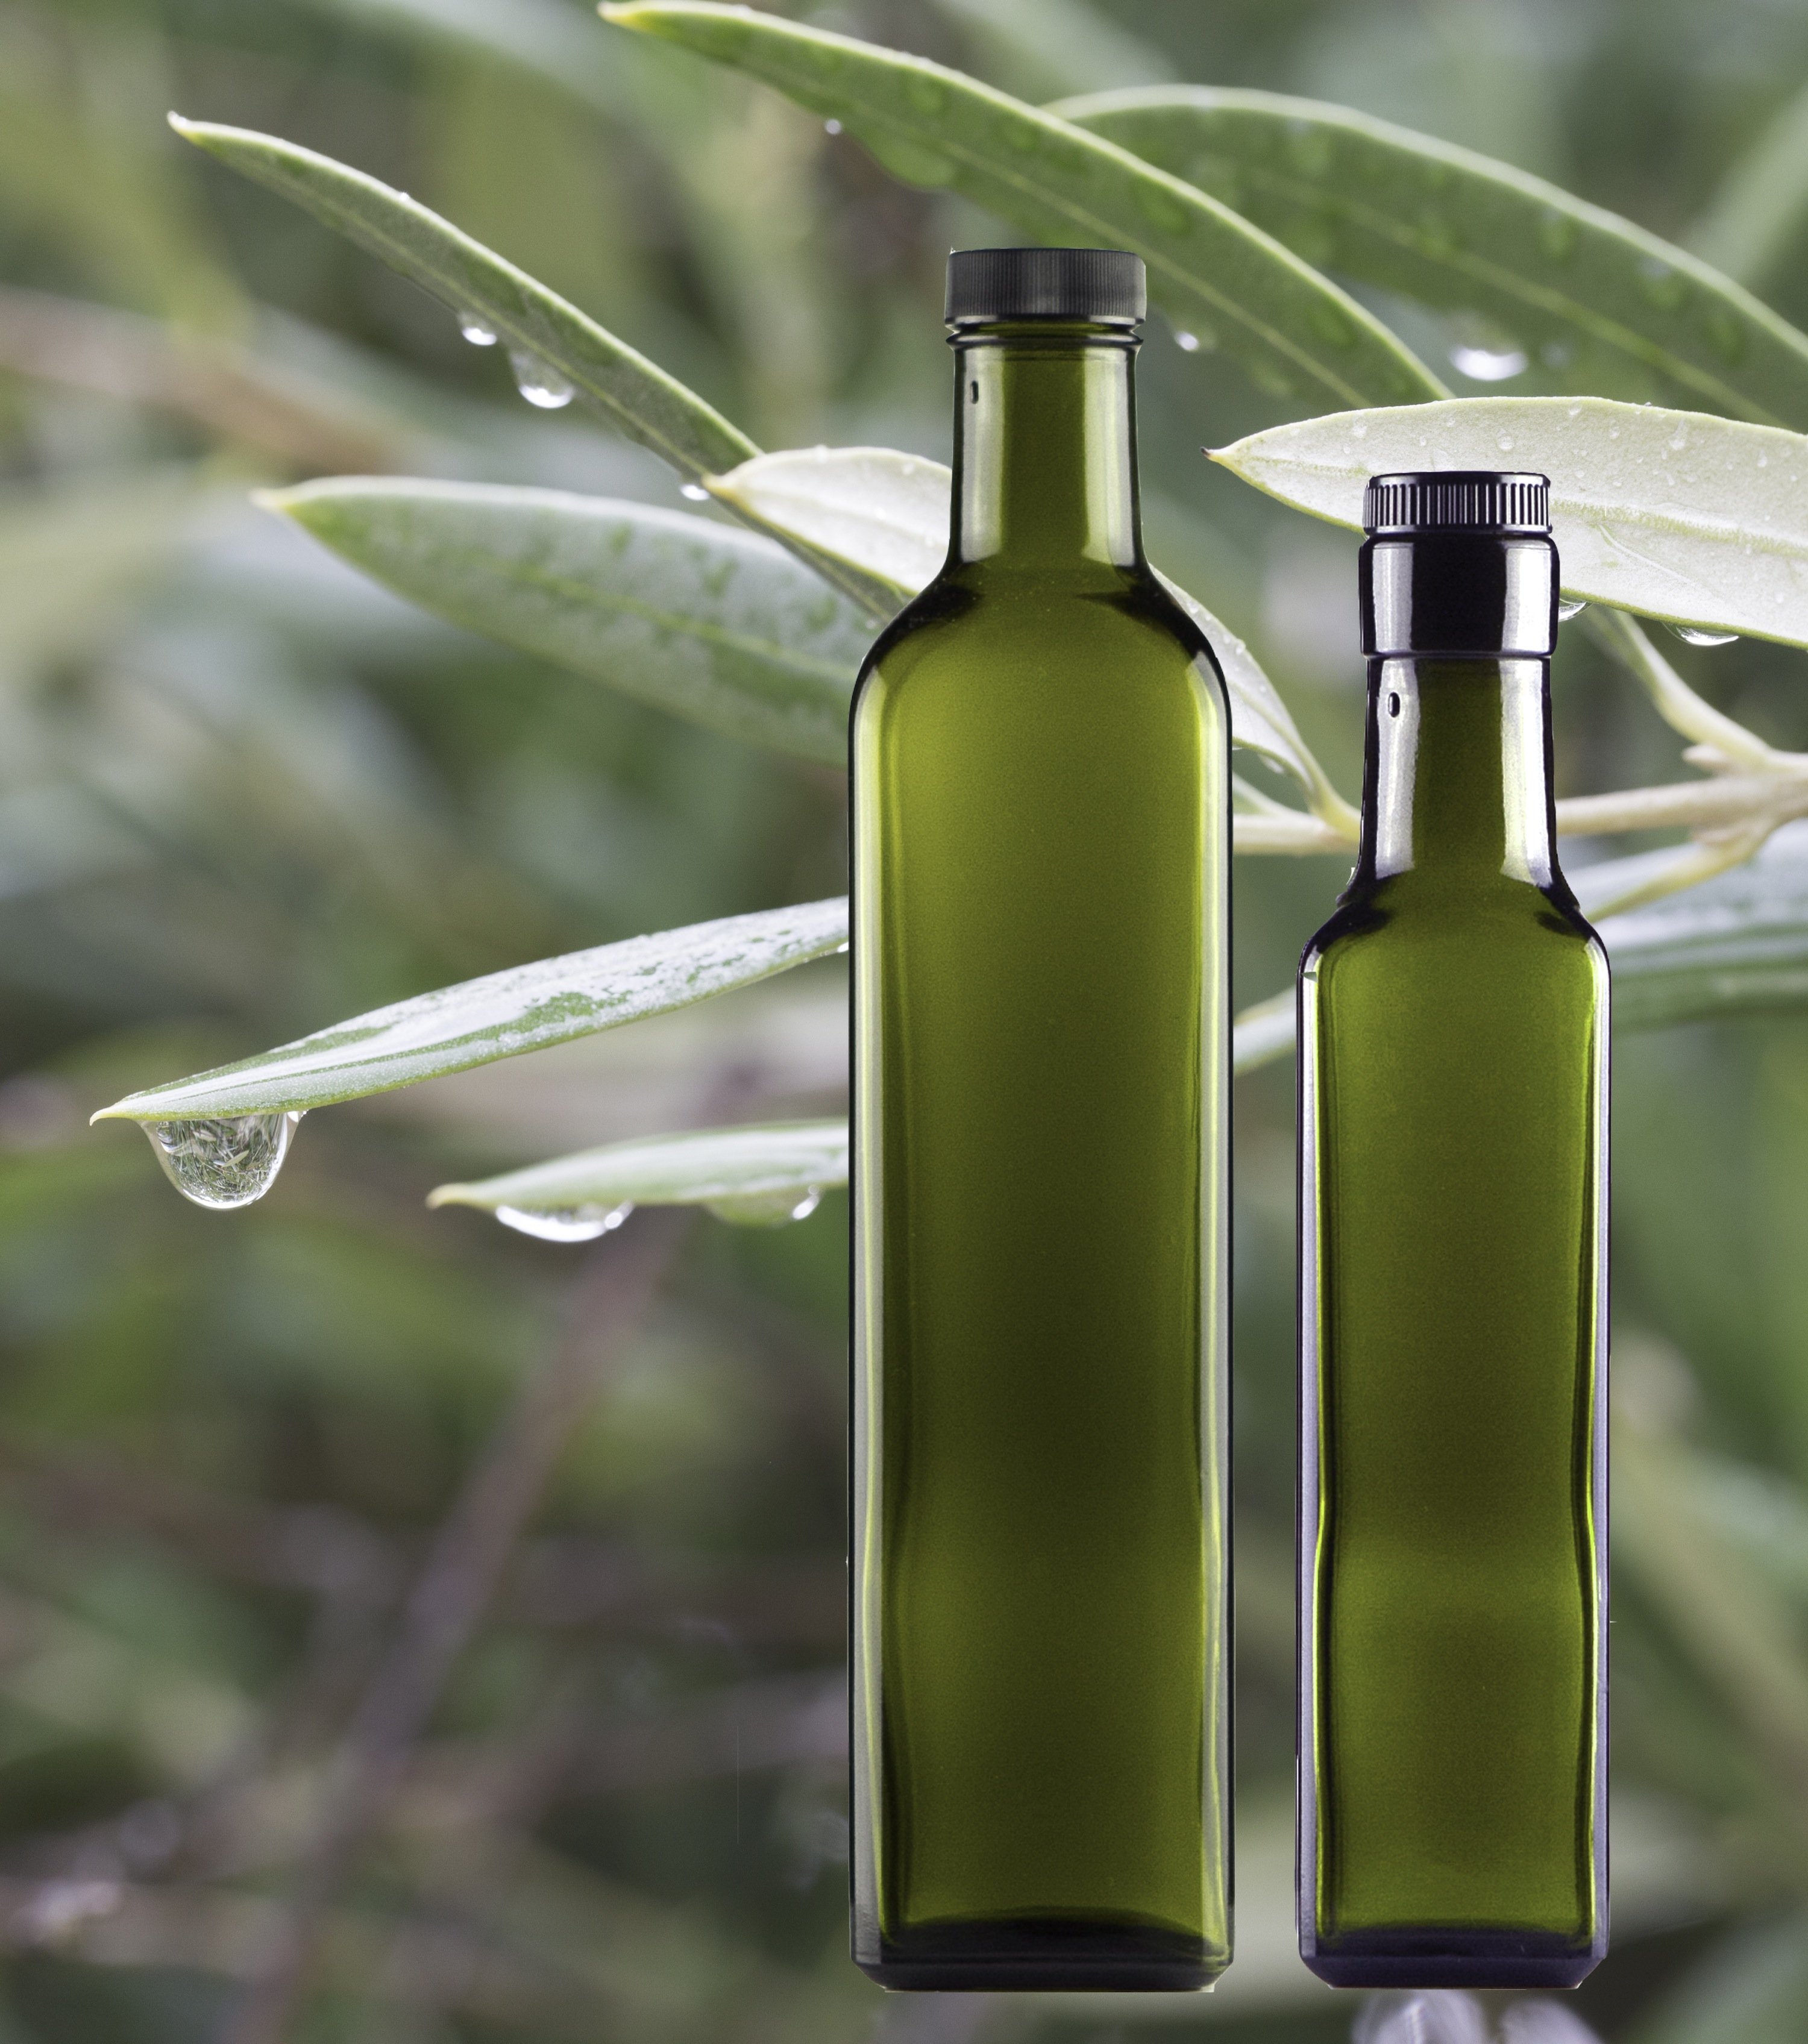 A bottle of olive oil. Оливковое масло. Бутылка оливкового масла. Оливковое масло в стеклянной бутылке. Бутылка олива.